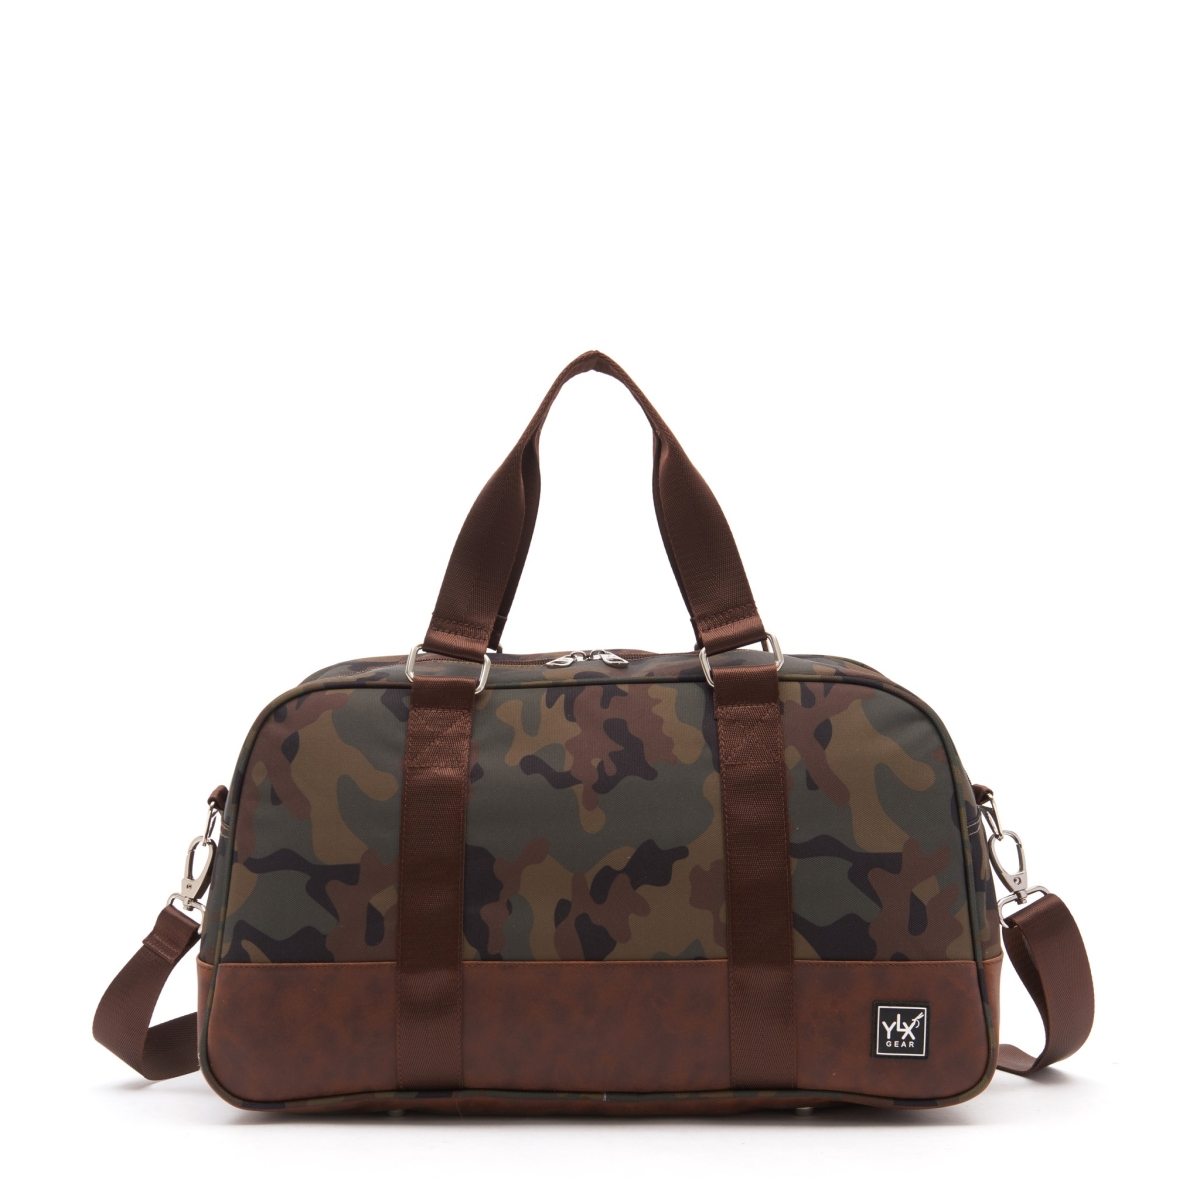 YLX Classic Duffel Bag | Camo Army